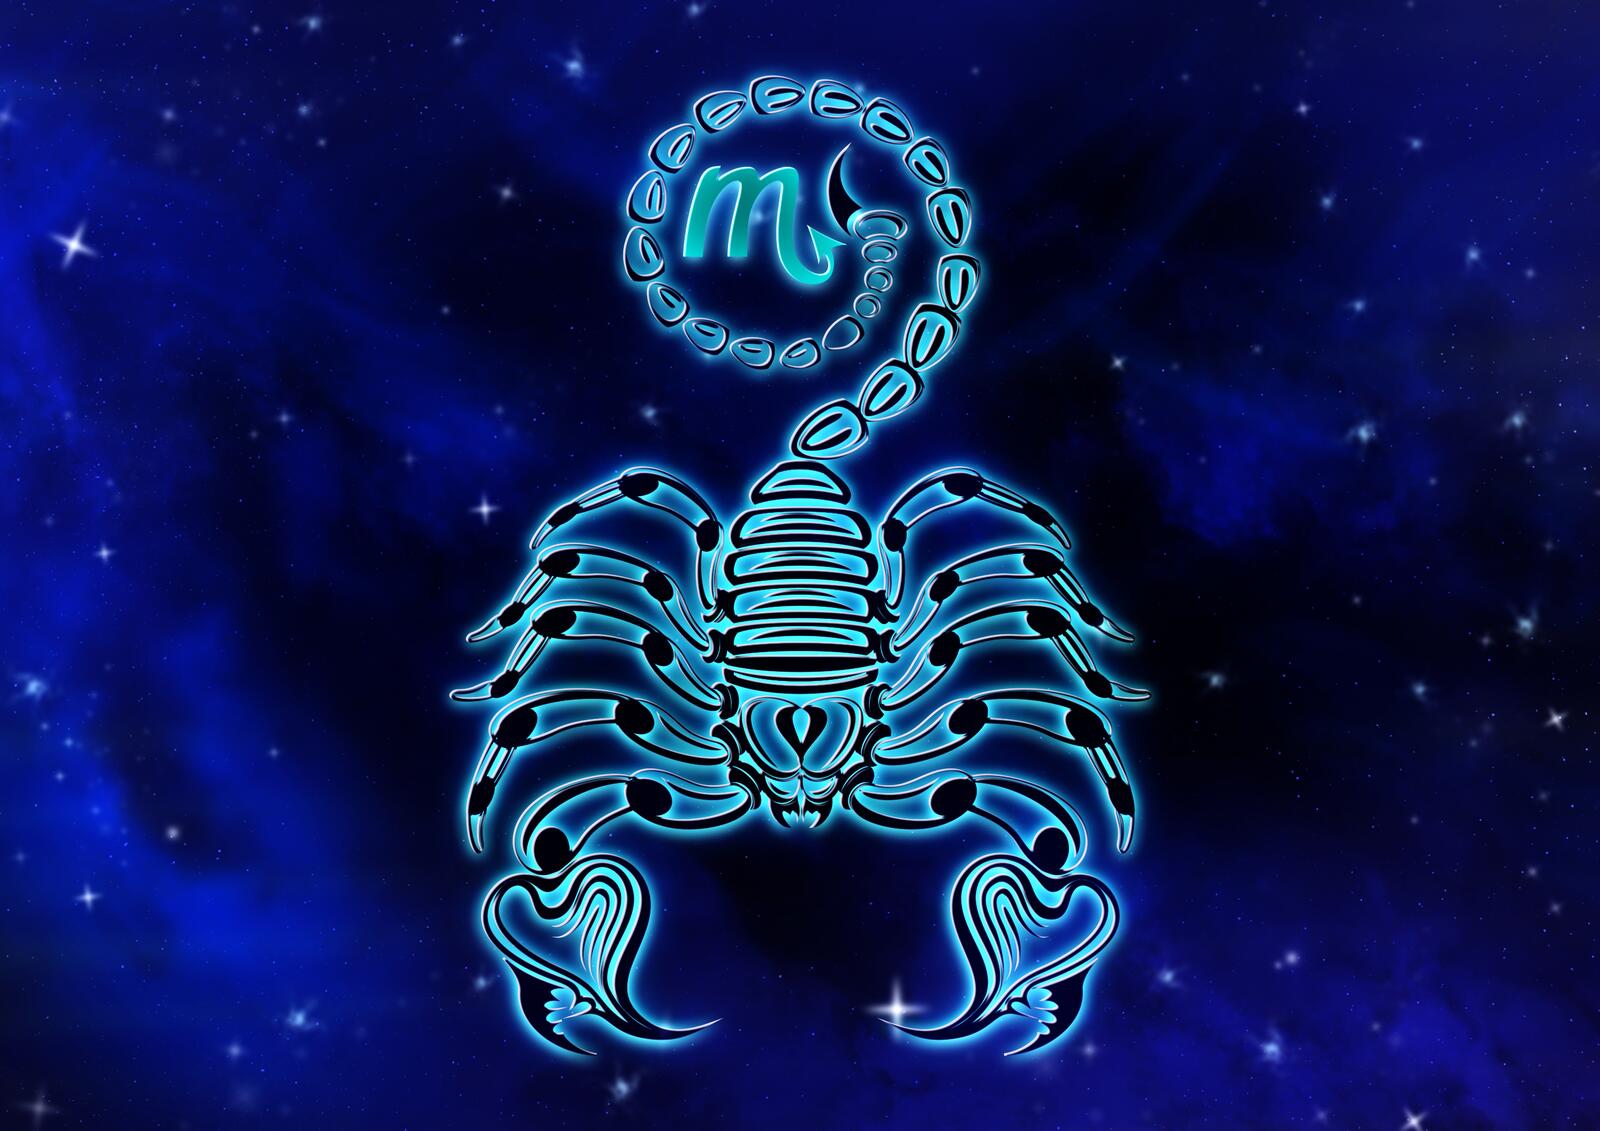 Wallpapers Scorpio zodiac sign horoscope on the desktop